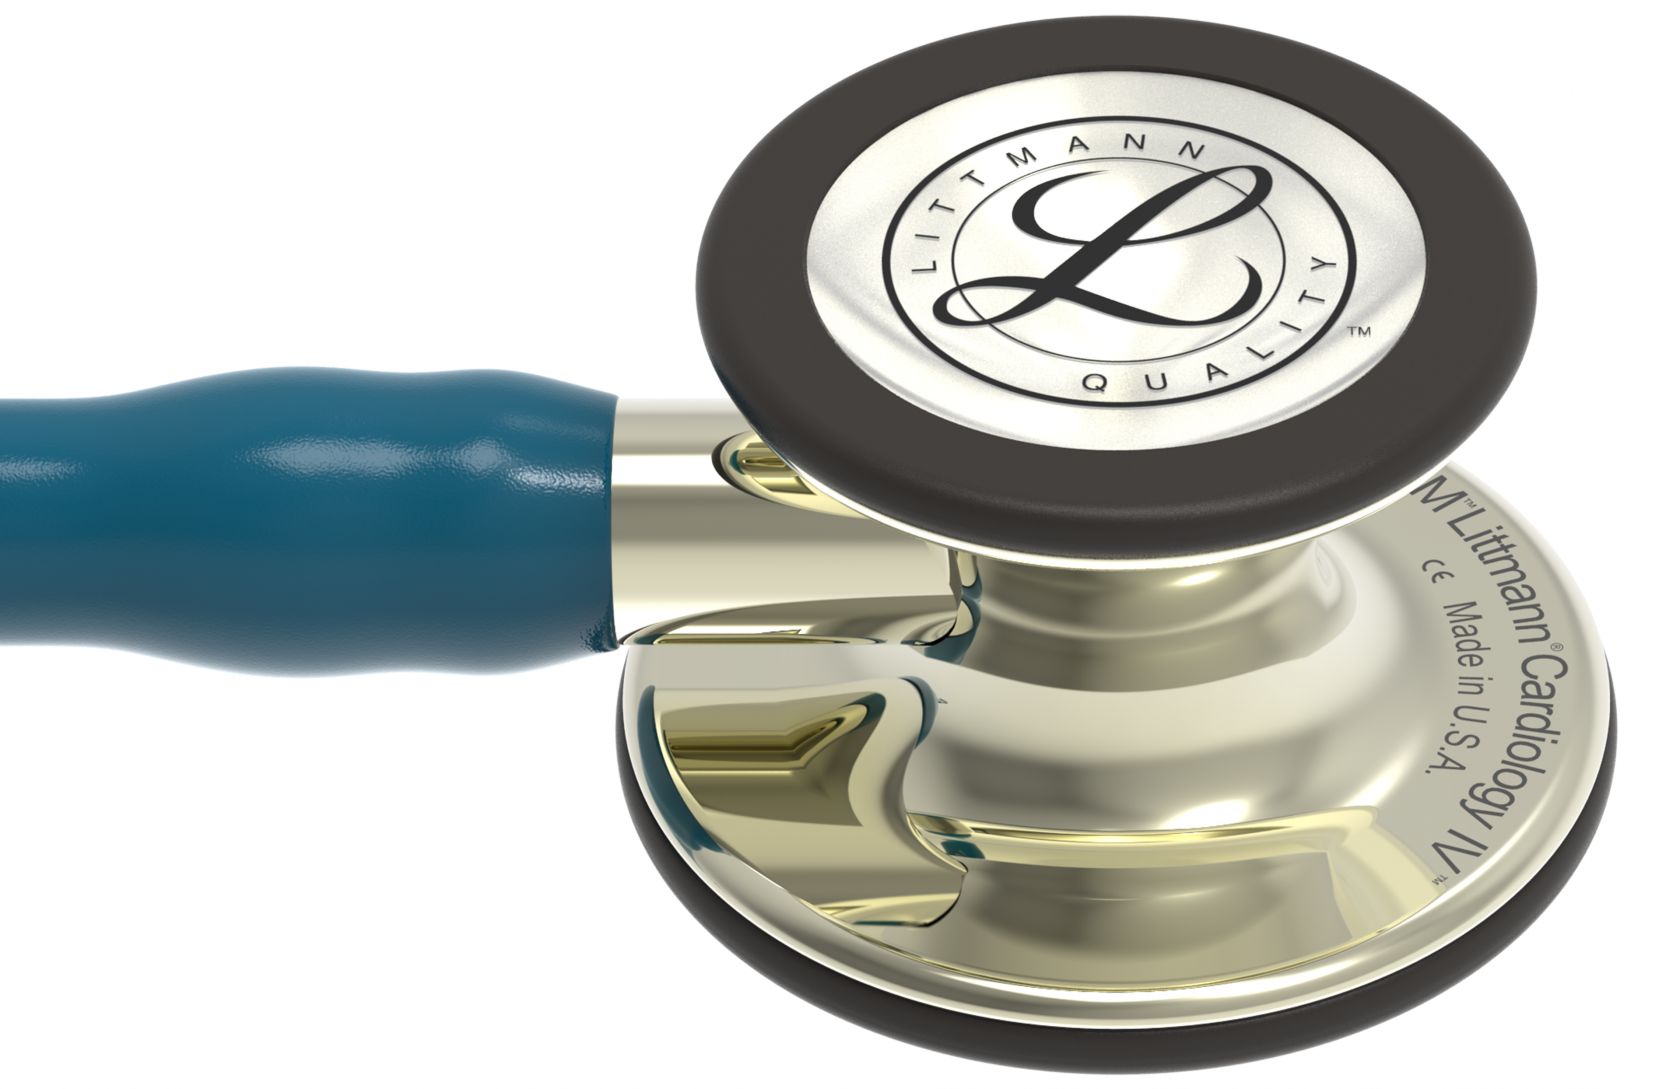 3M Stethoscope Littmann Cardiology IV Caribbean Blue with Champagne Finish image 1